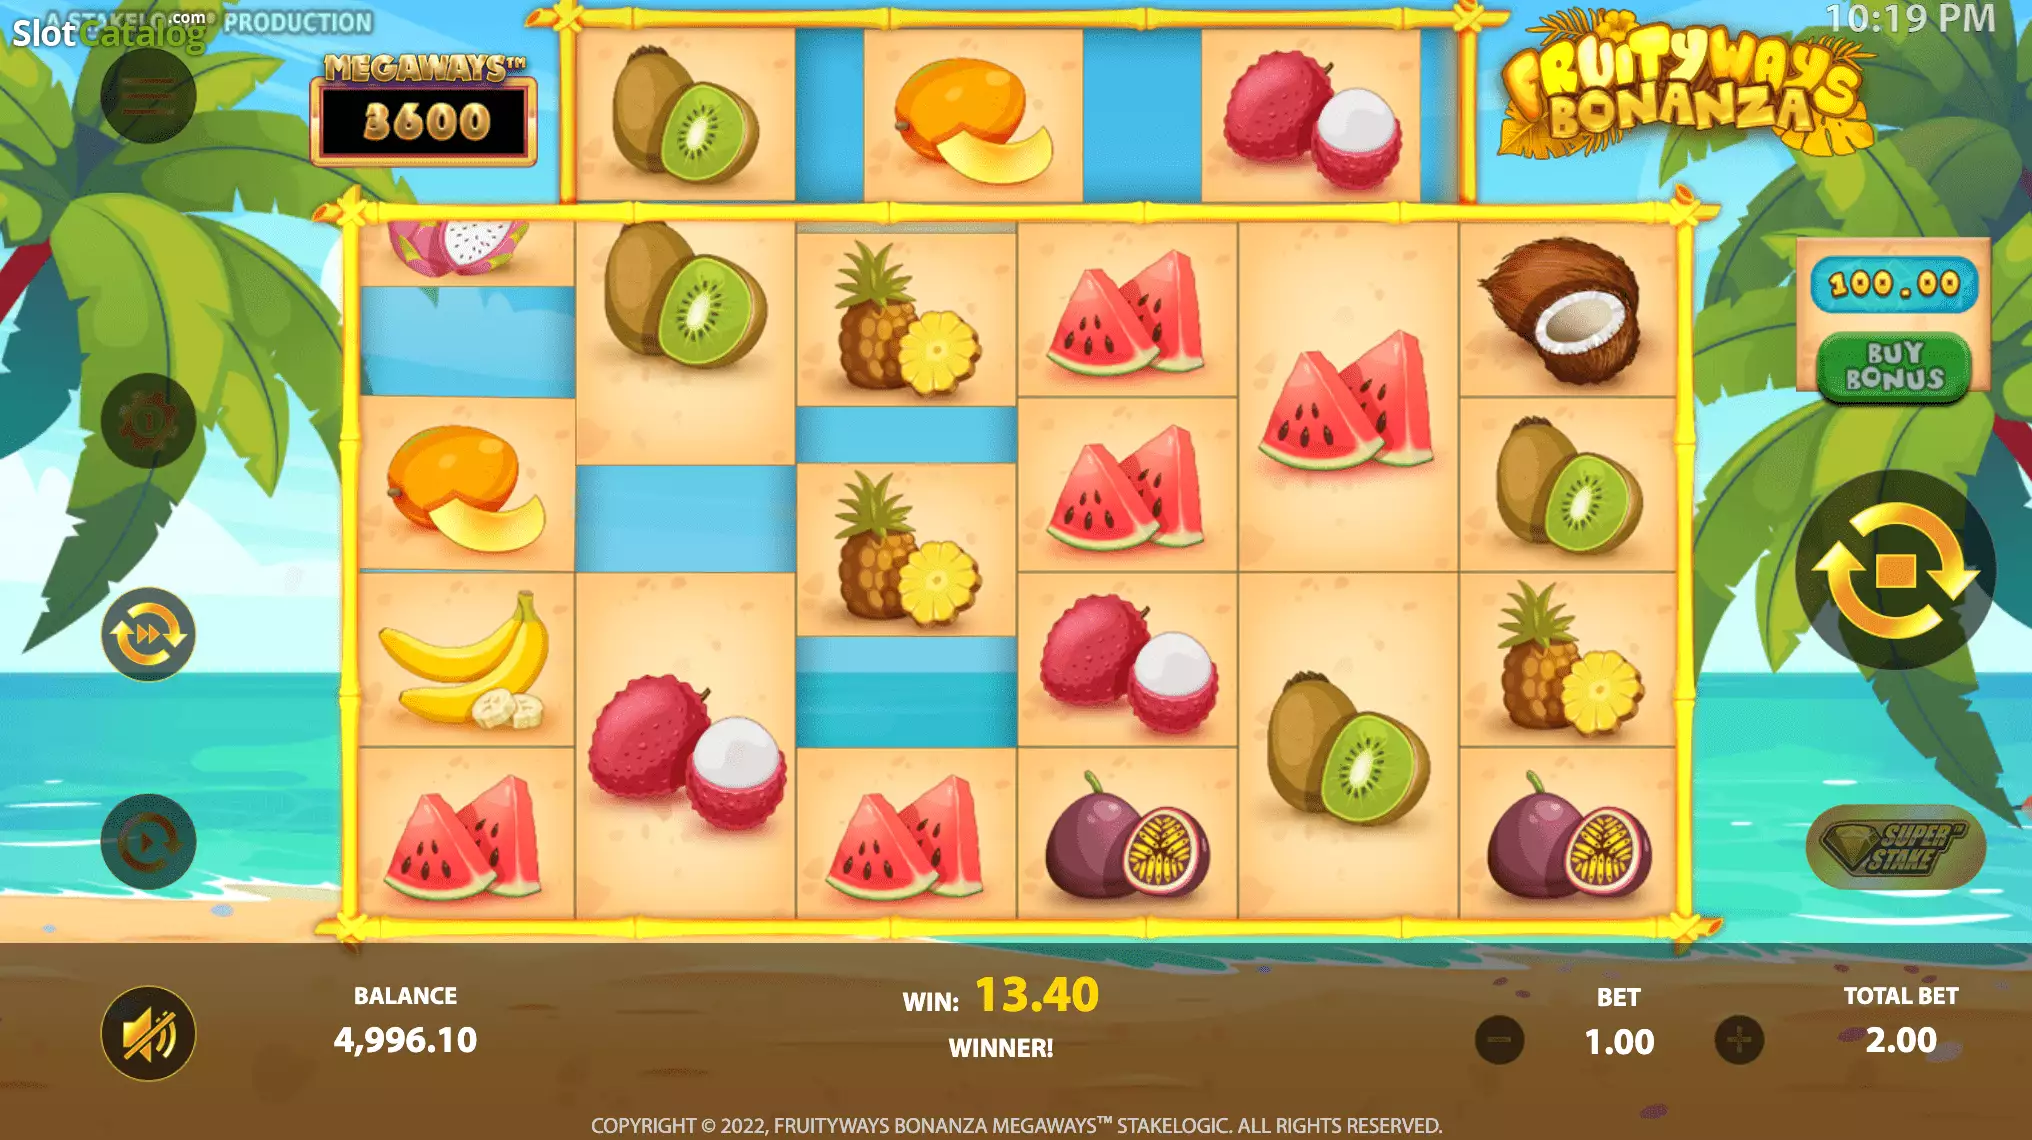 Fruityways Bonanza Megaways Slot - Free Demo & Game Review